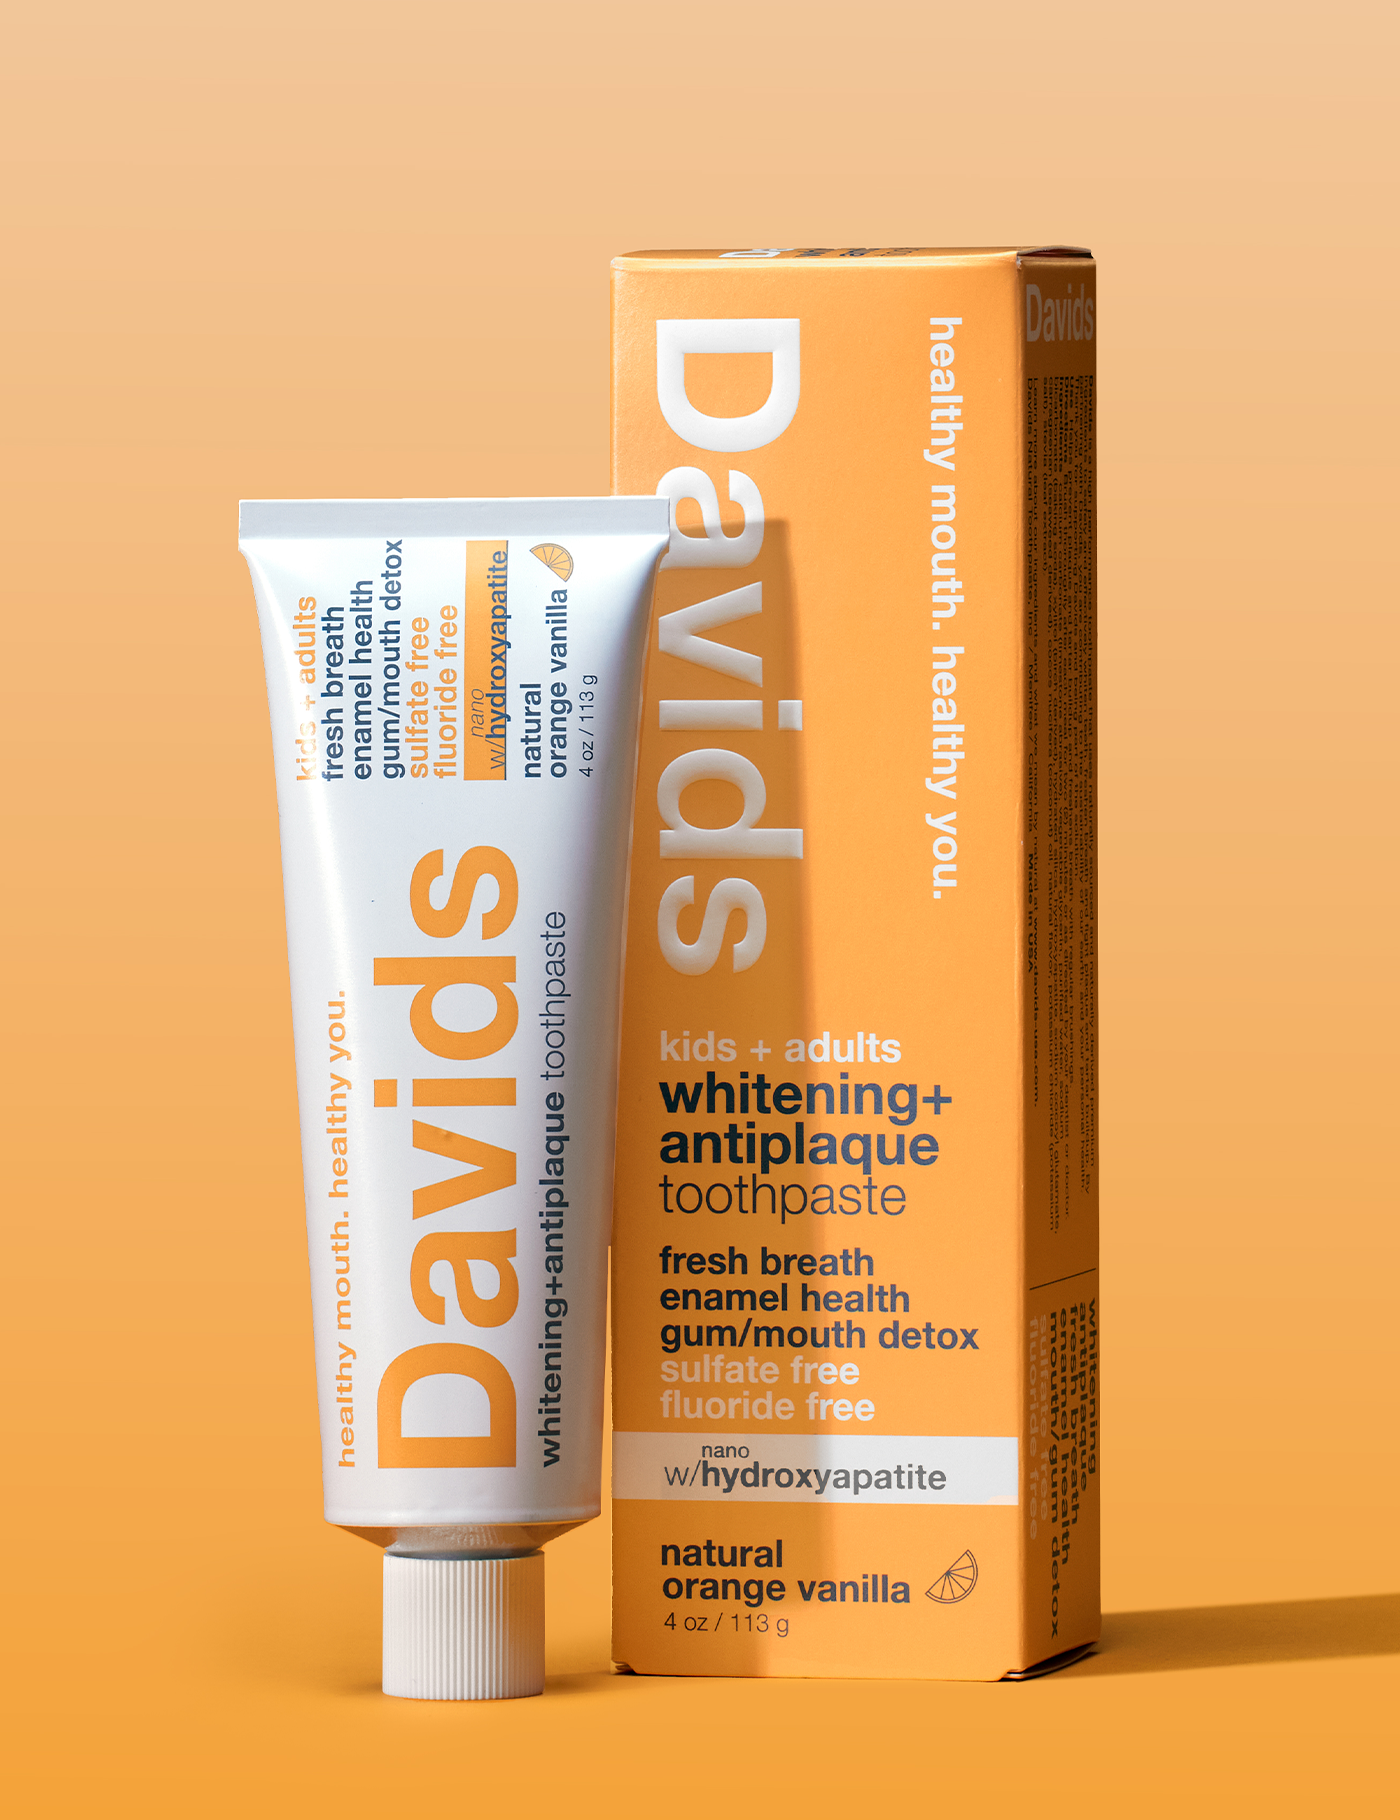 Davids kids + adults nano-hydroxyapatite premium toothpaste  /  orange vanilla